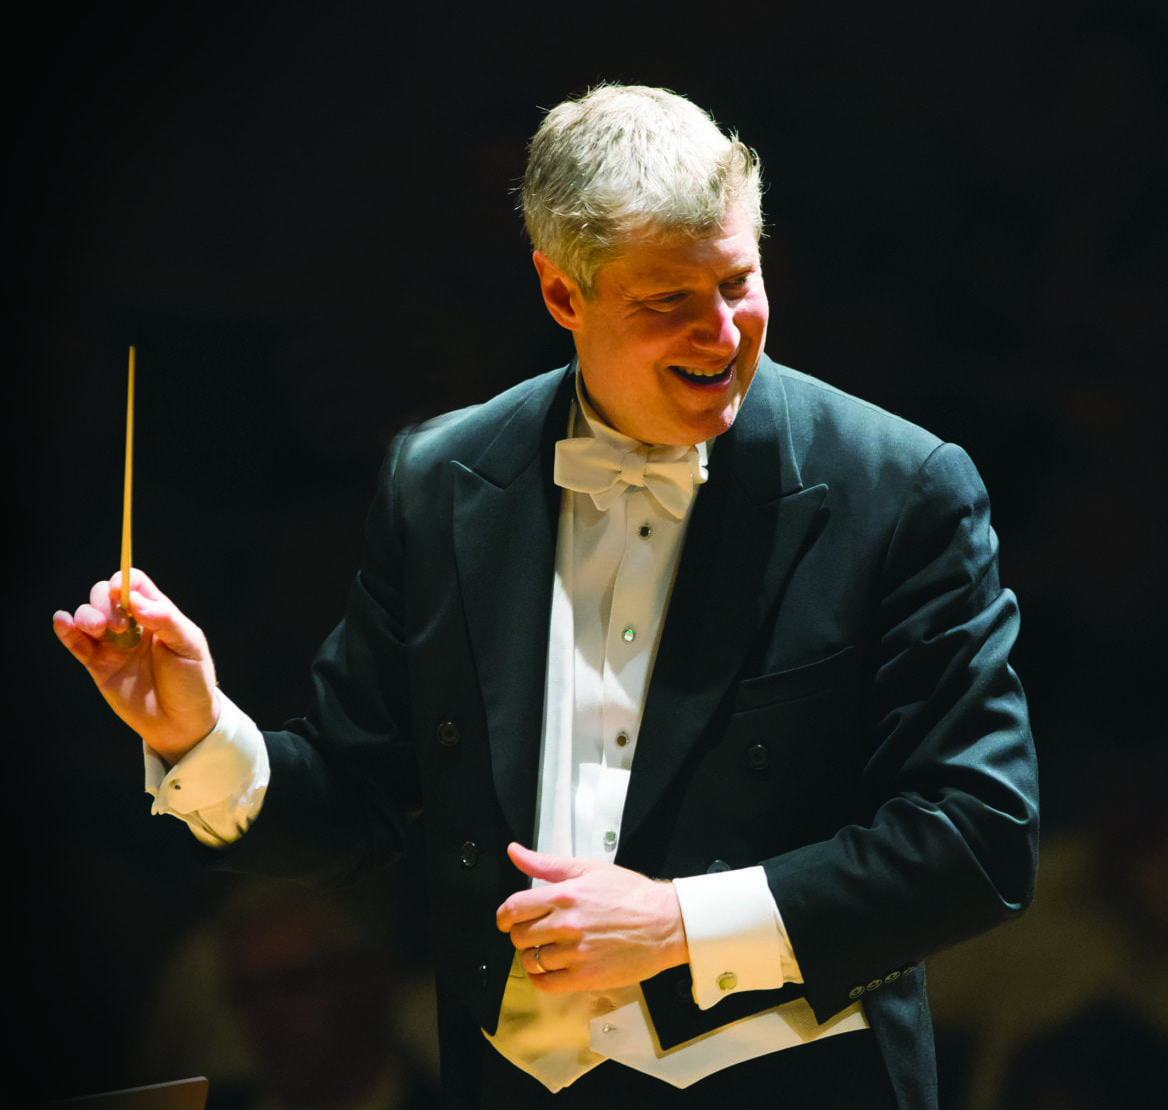 a man conducting an orchestra.